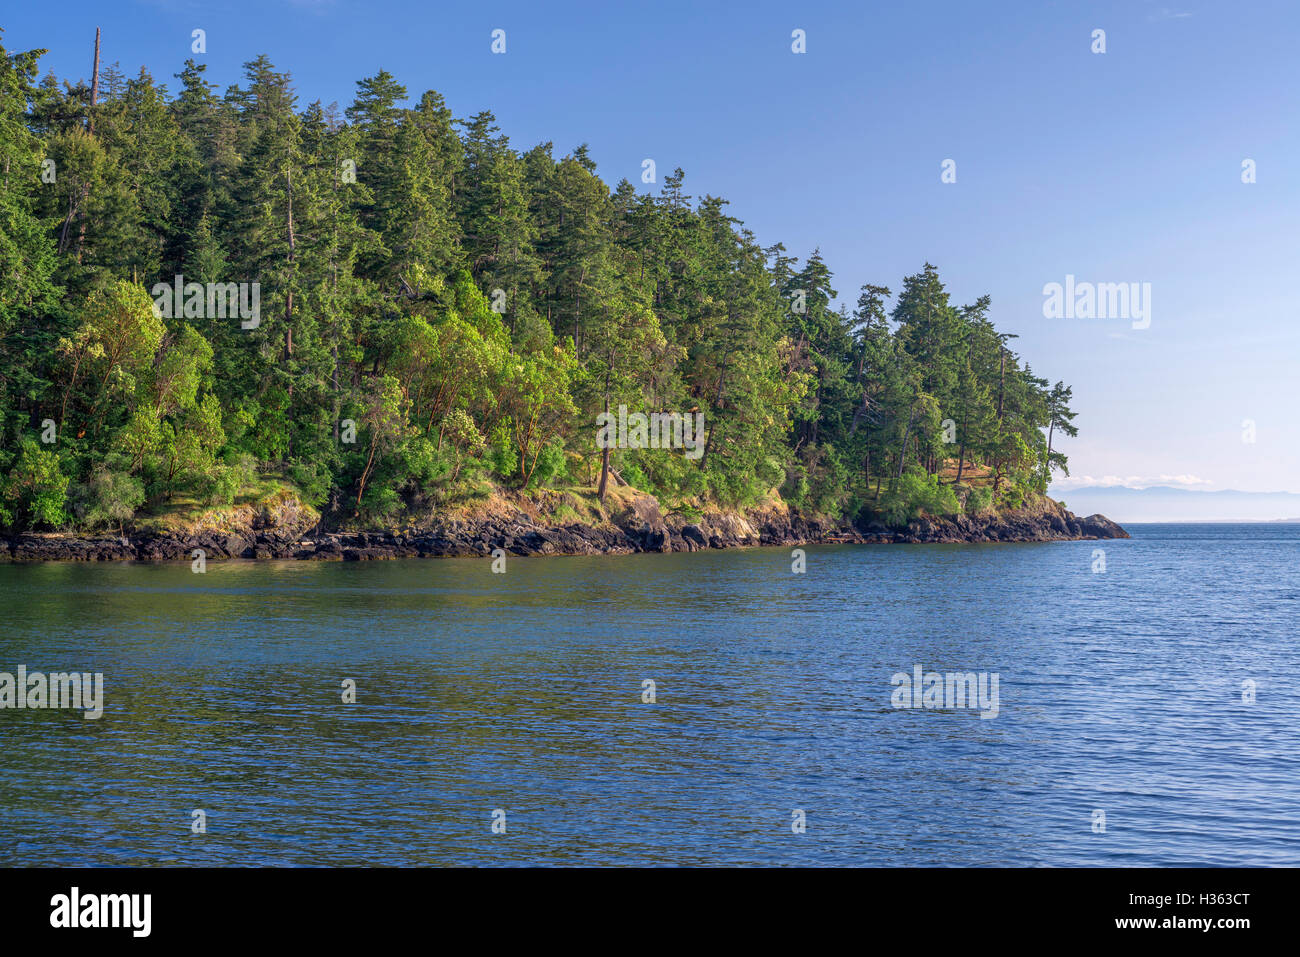 USA, Washington, San Juan Island, Forest of Pacific madrone and Douglas fir above rocky shoreline at San Juan County Park. Stock Photo